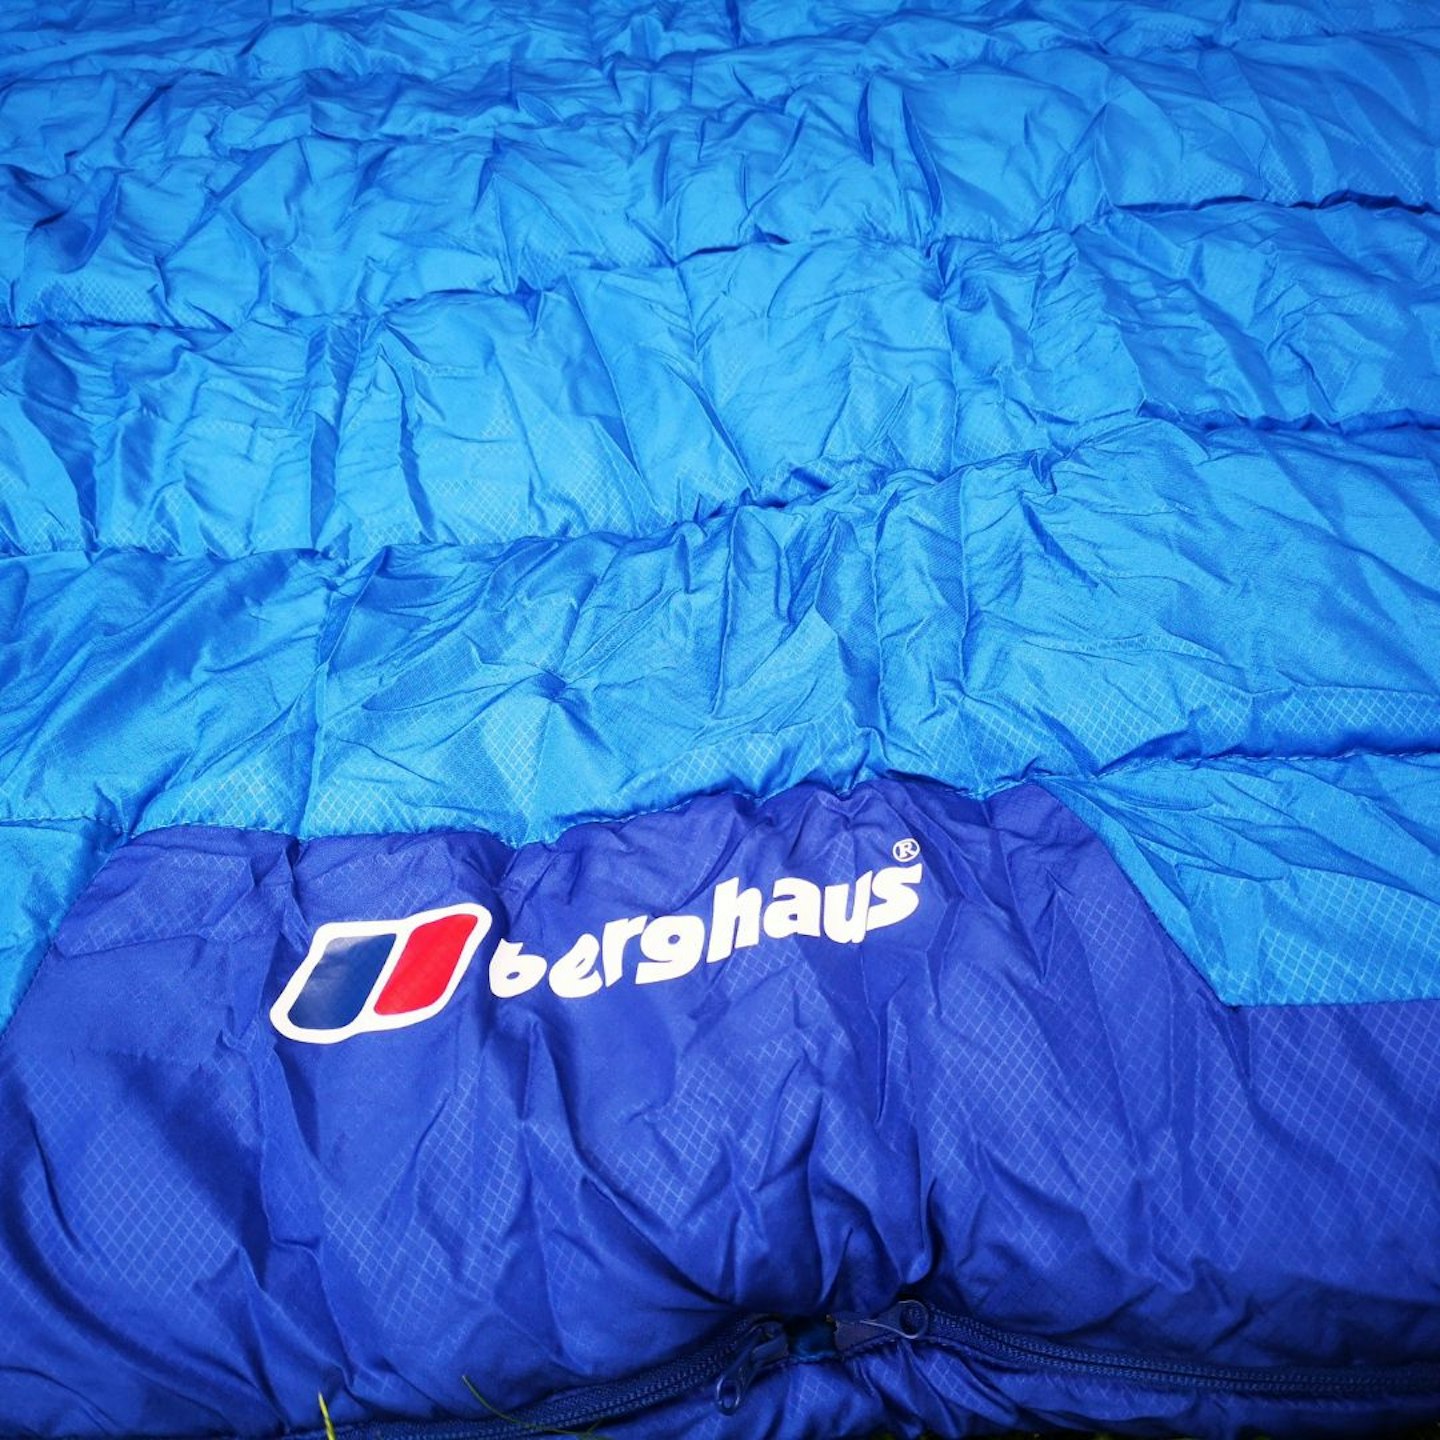 berghaus indulge double logo